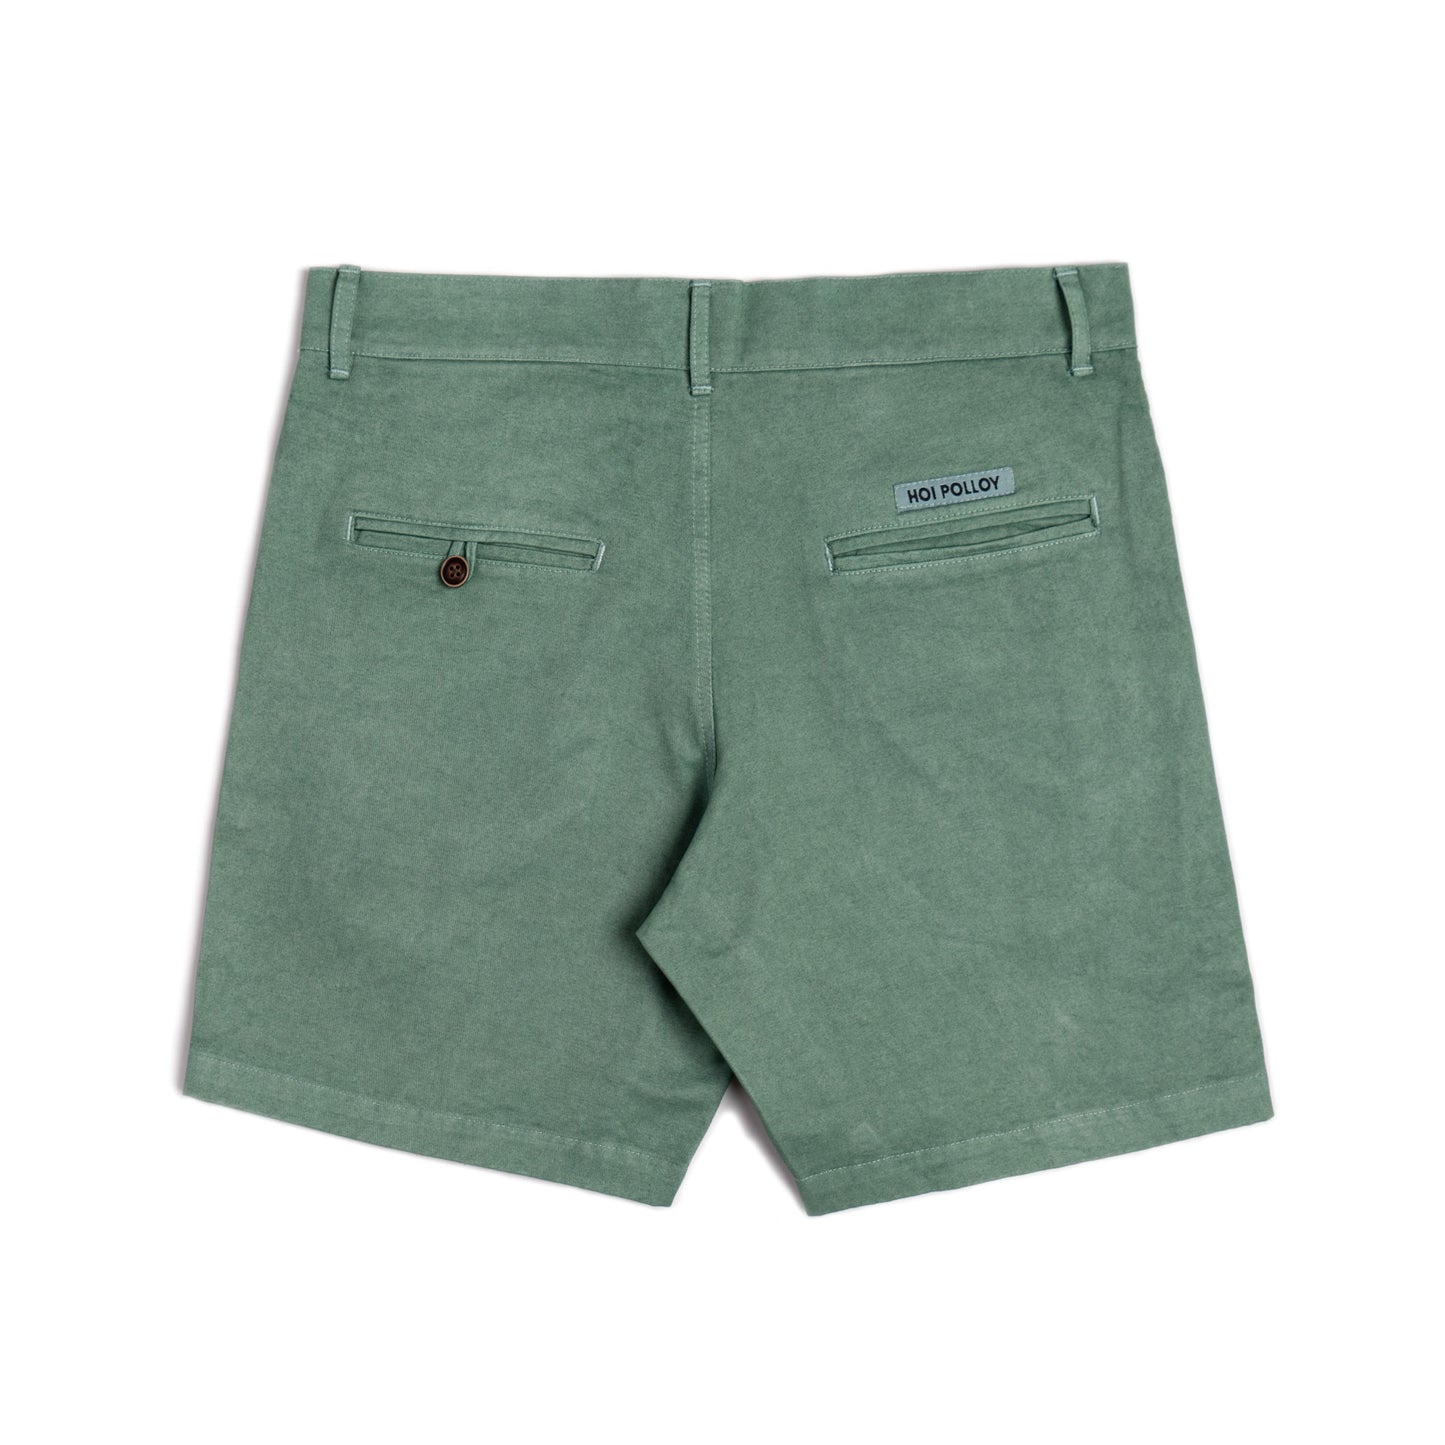 Slack Shorts Green